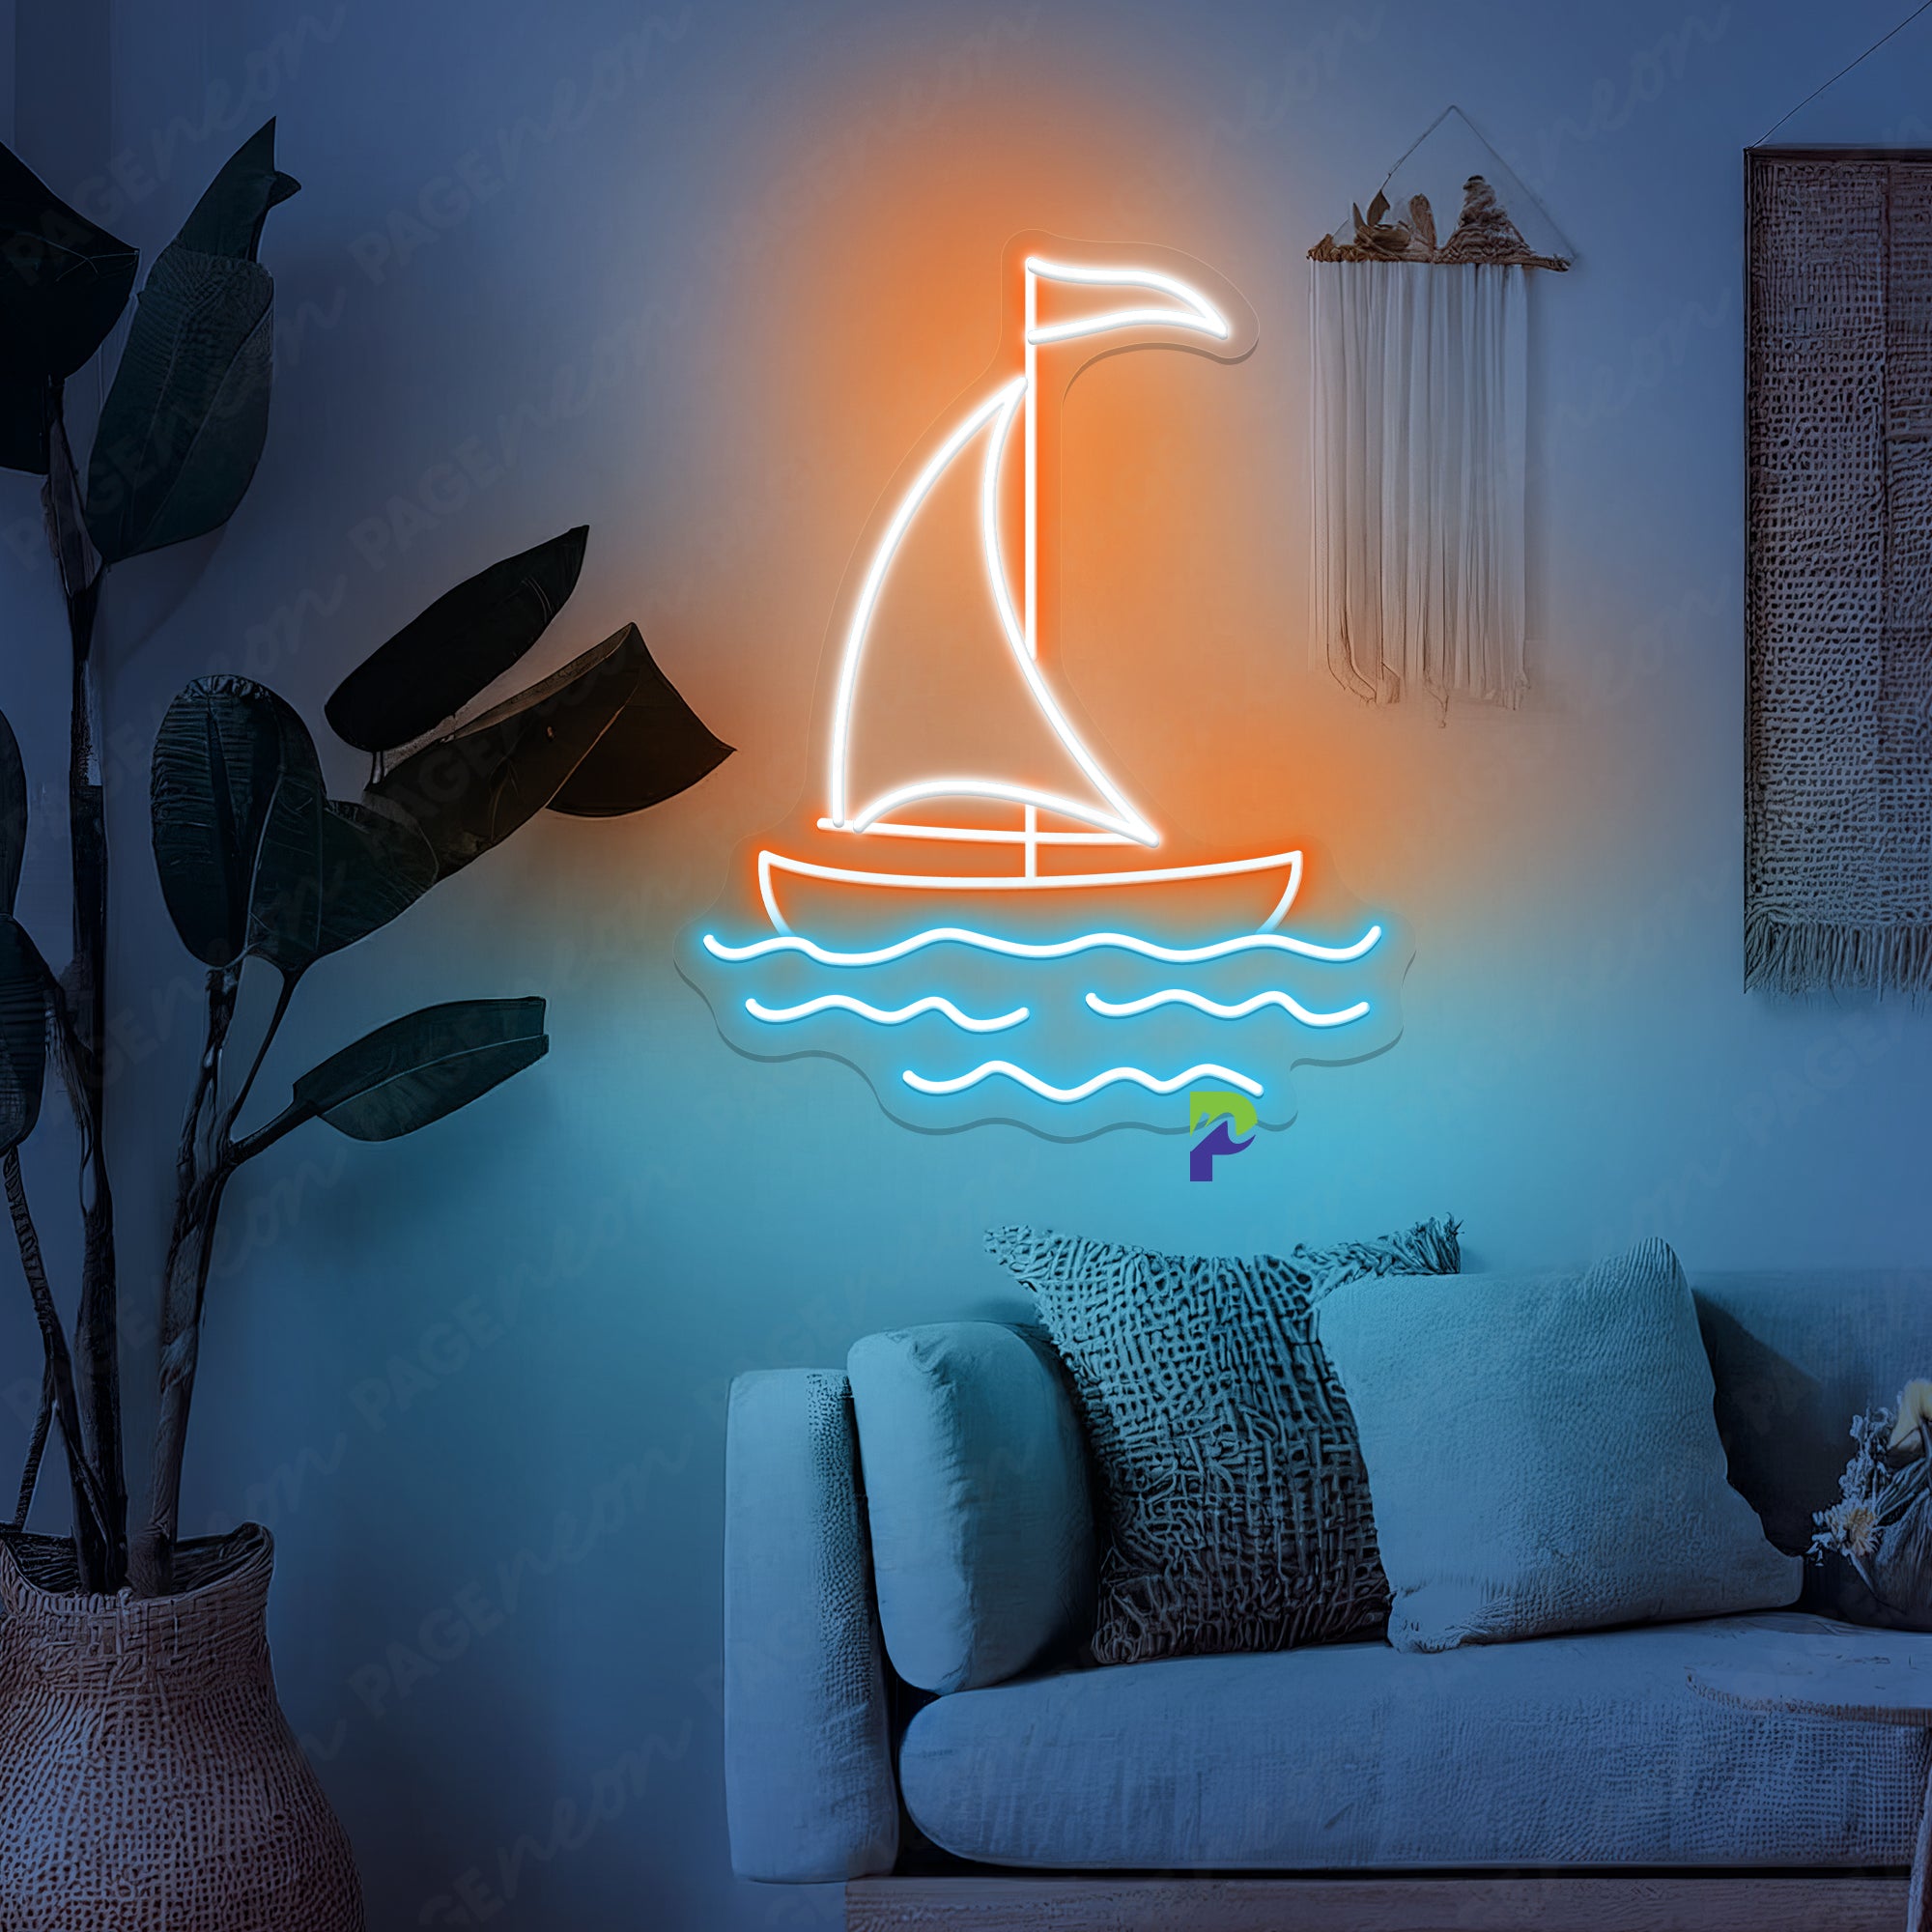 Boat Neon Sign Sailing Sea Tropical Led Light